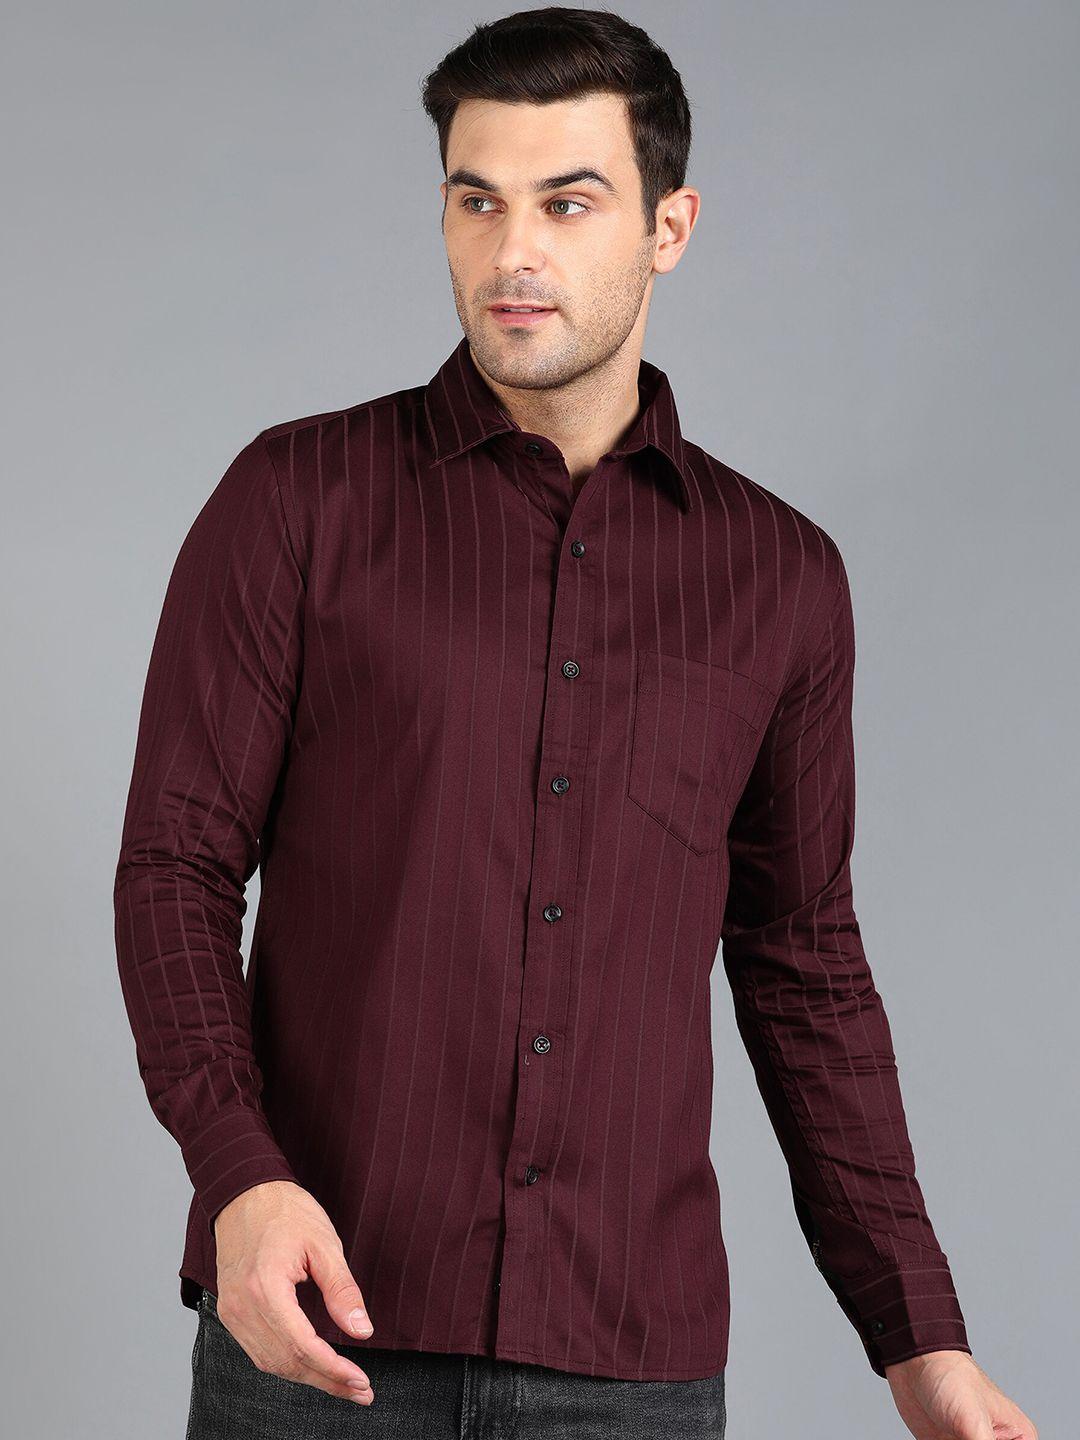 znx clothing men maroon premium slim fit opaque striped formal shirt